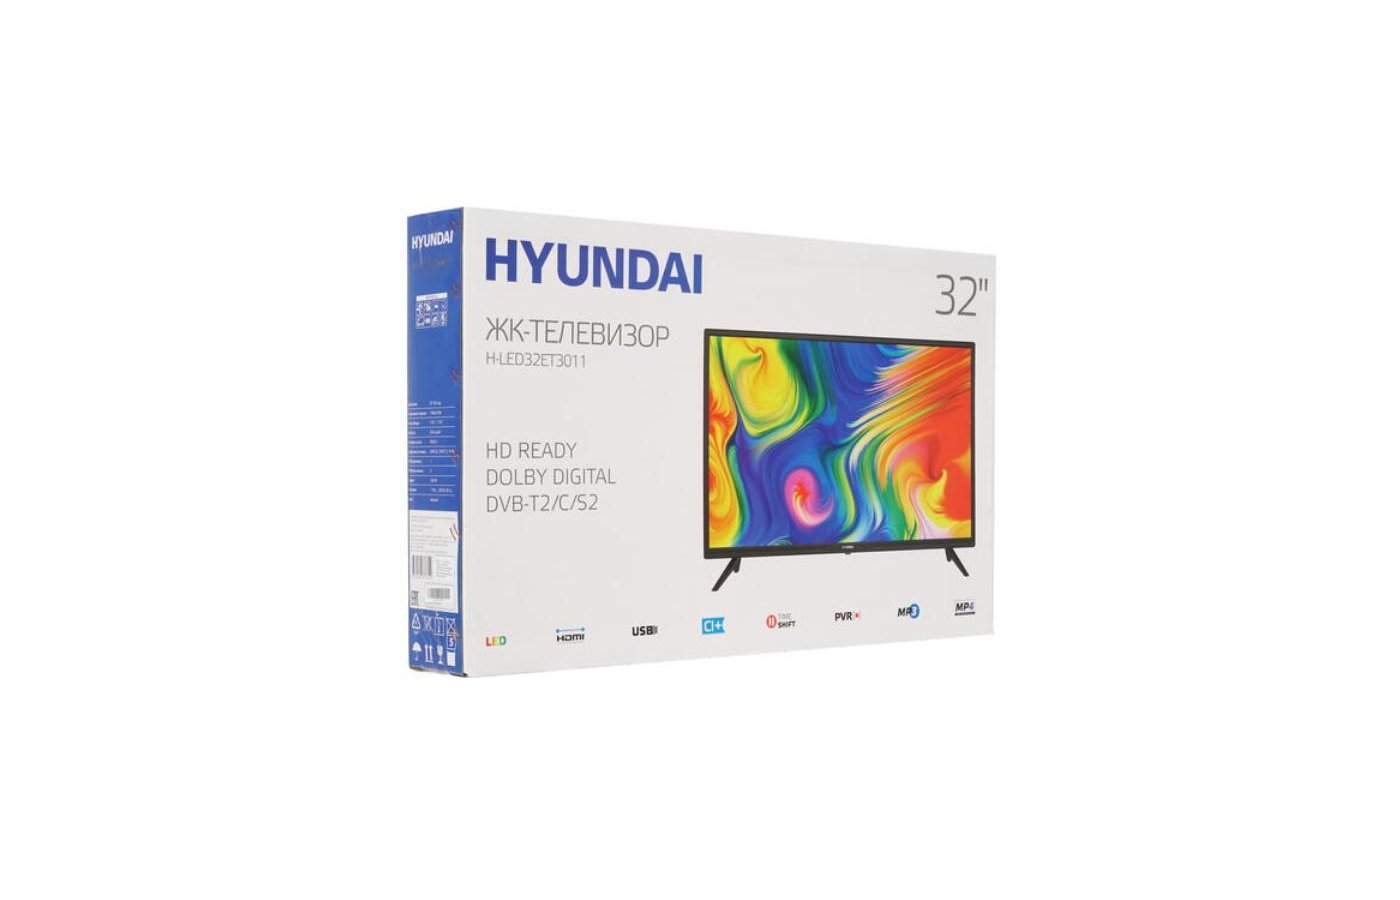 Led40bs5002 телевизор hyundai. Телевизор Hyundai h-led32et3011. Телевизор Hyundai отзывы. Характеристики Hyundai h-led32et3011 2020 led -. ТВ Хендай 70 см отзывы.